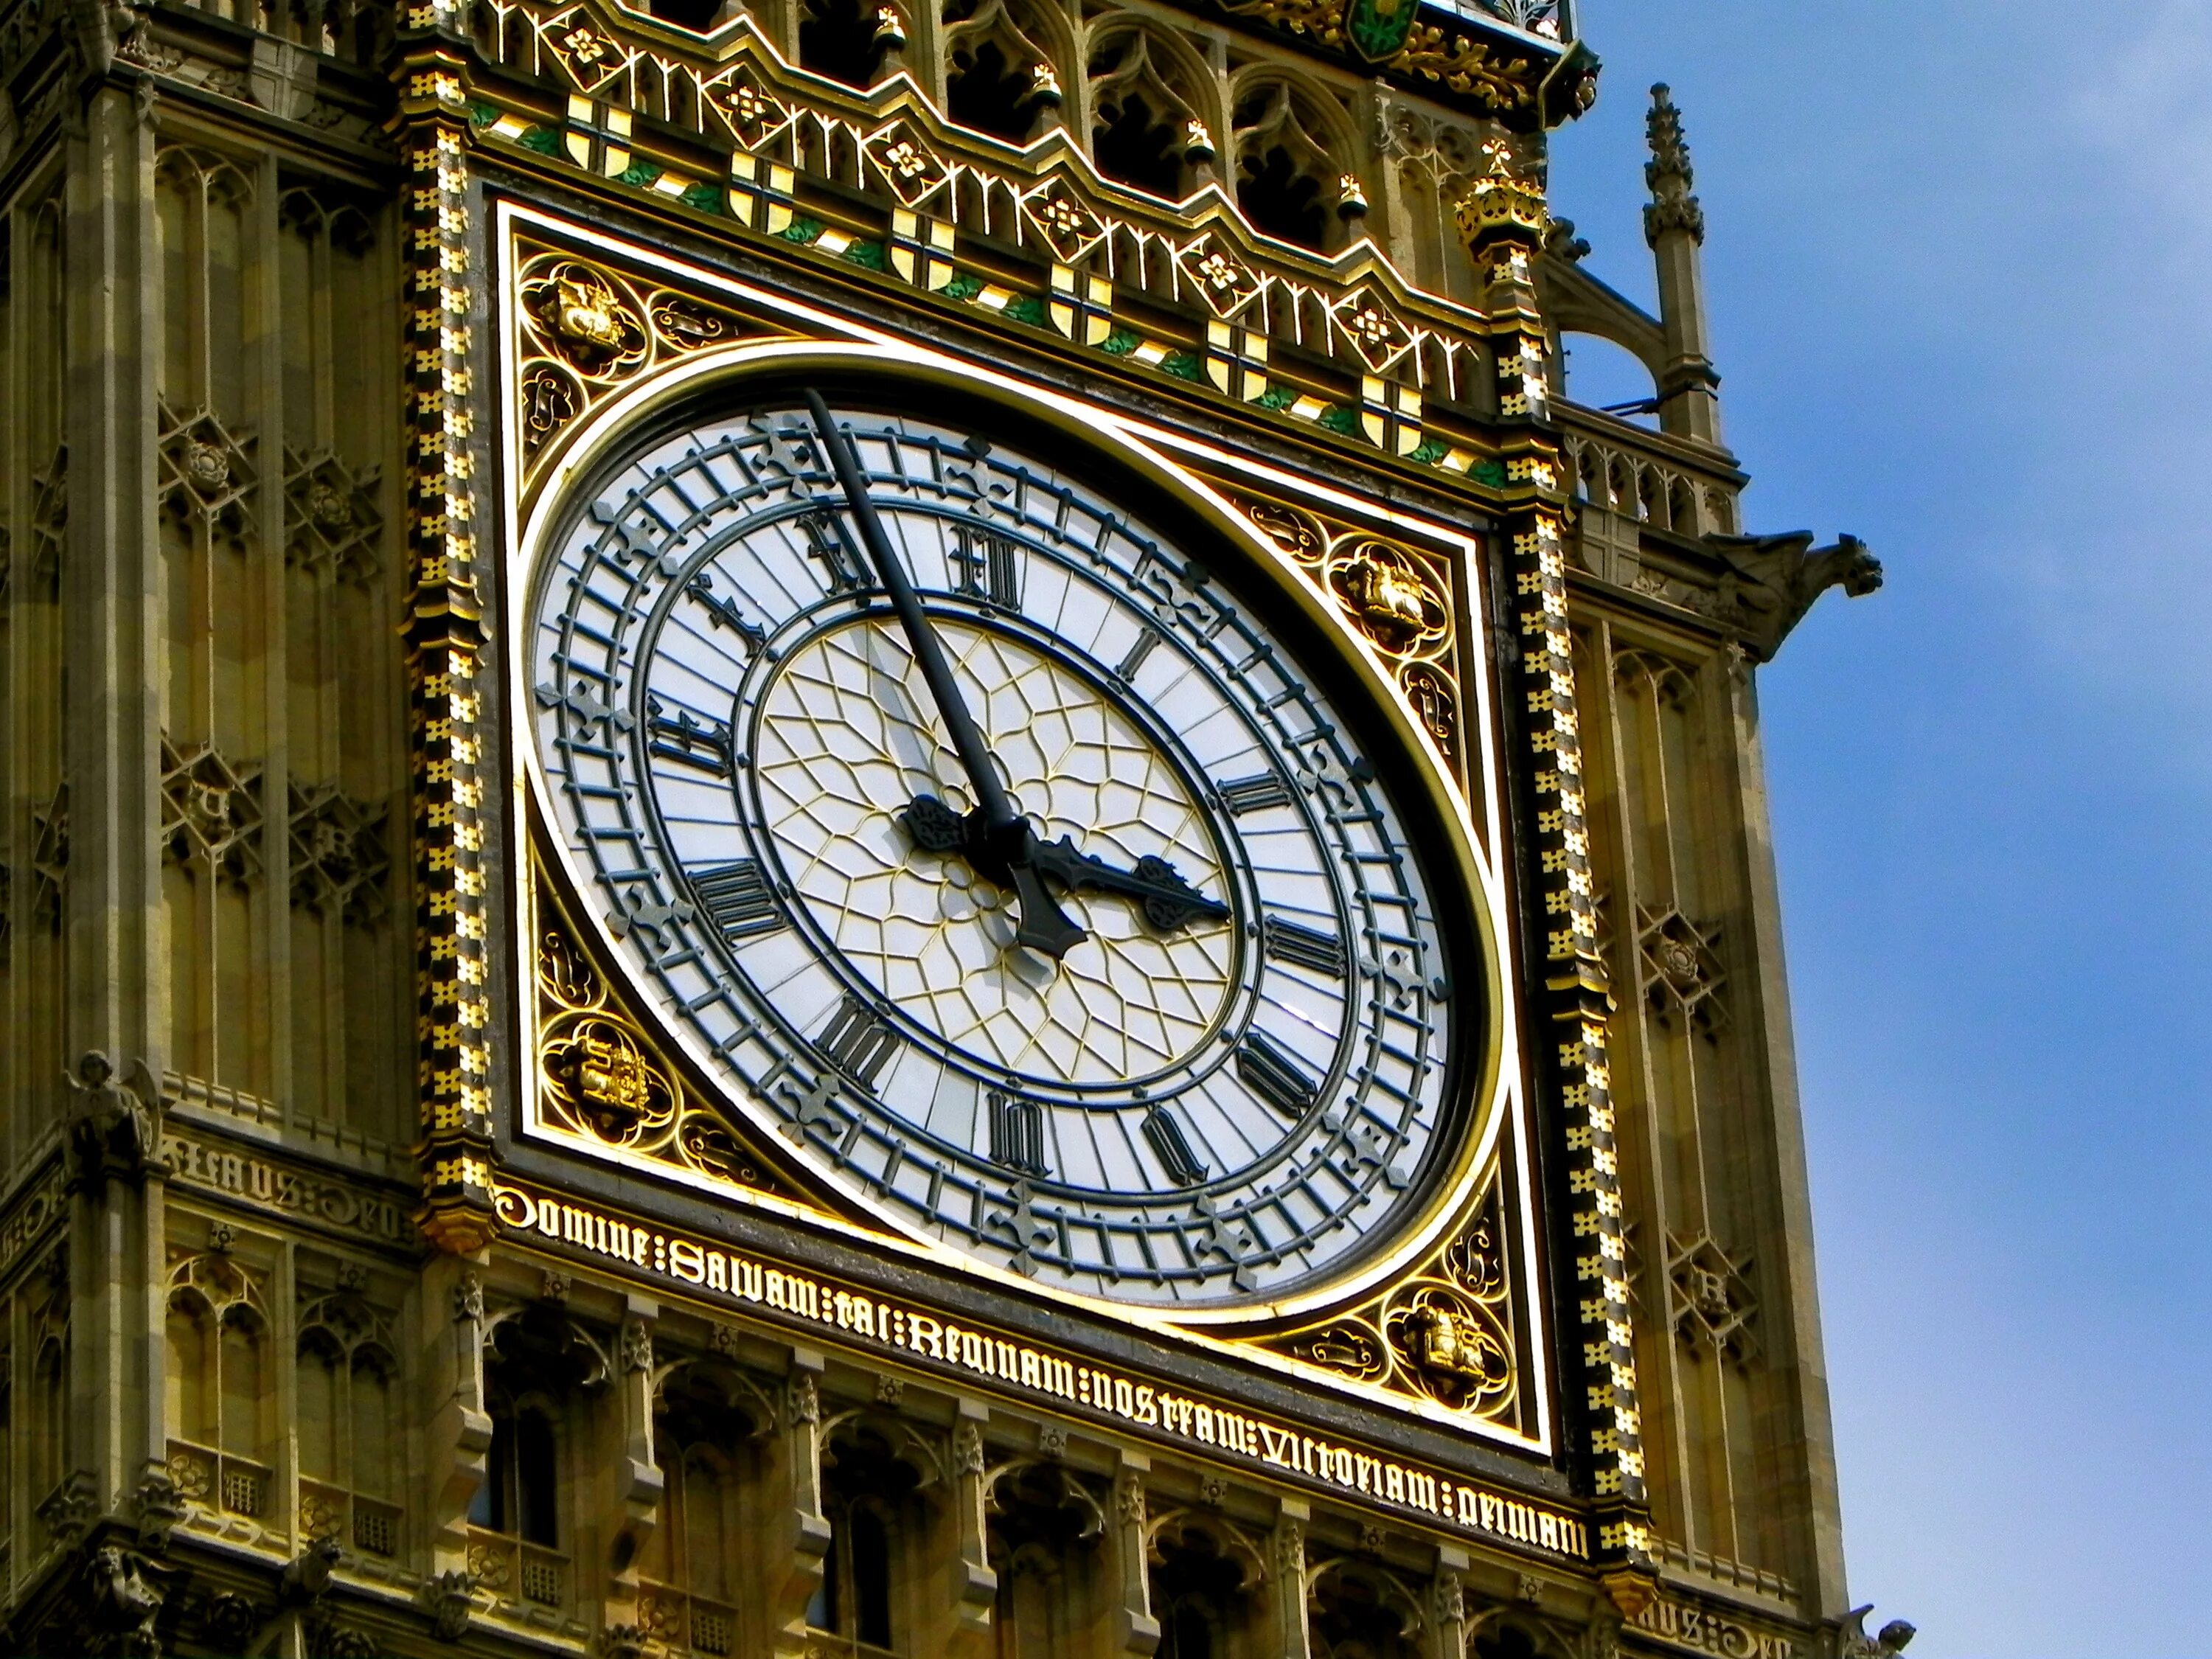 Самых больших часов. Биг-Бен (башня Елизаветы). Башенные часы Биг Бен. Часовня в Лондоне Биг Бен. Часы на башне Биг Бен.